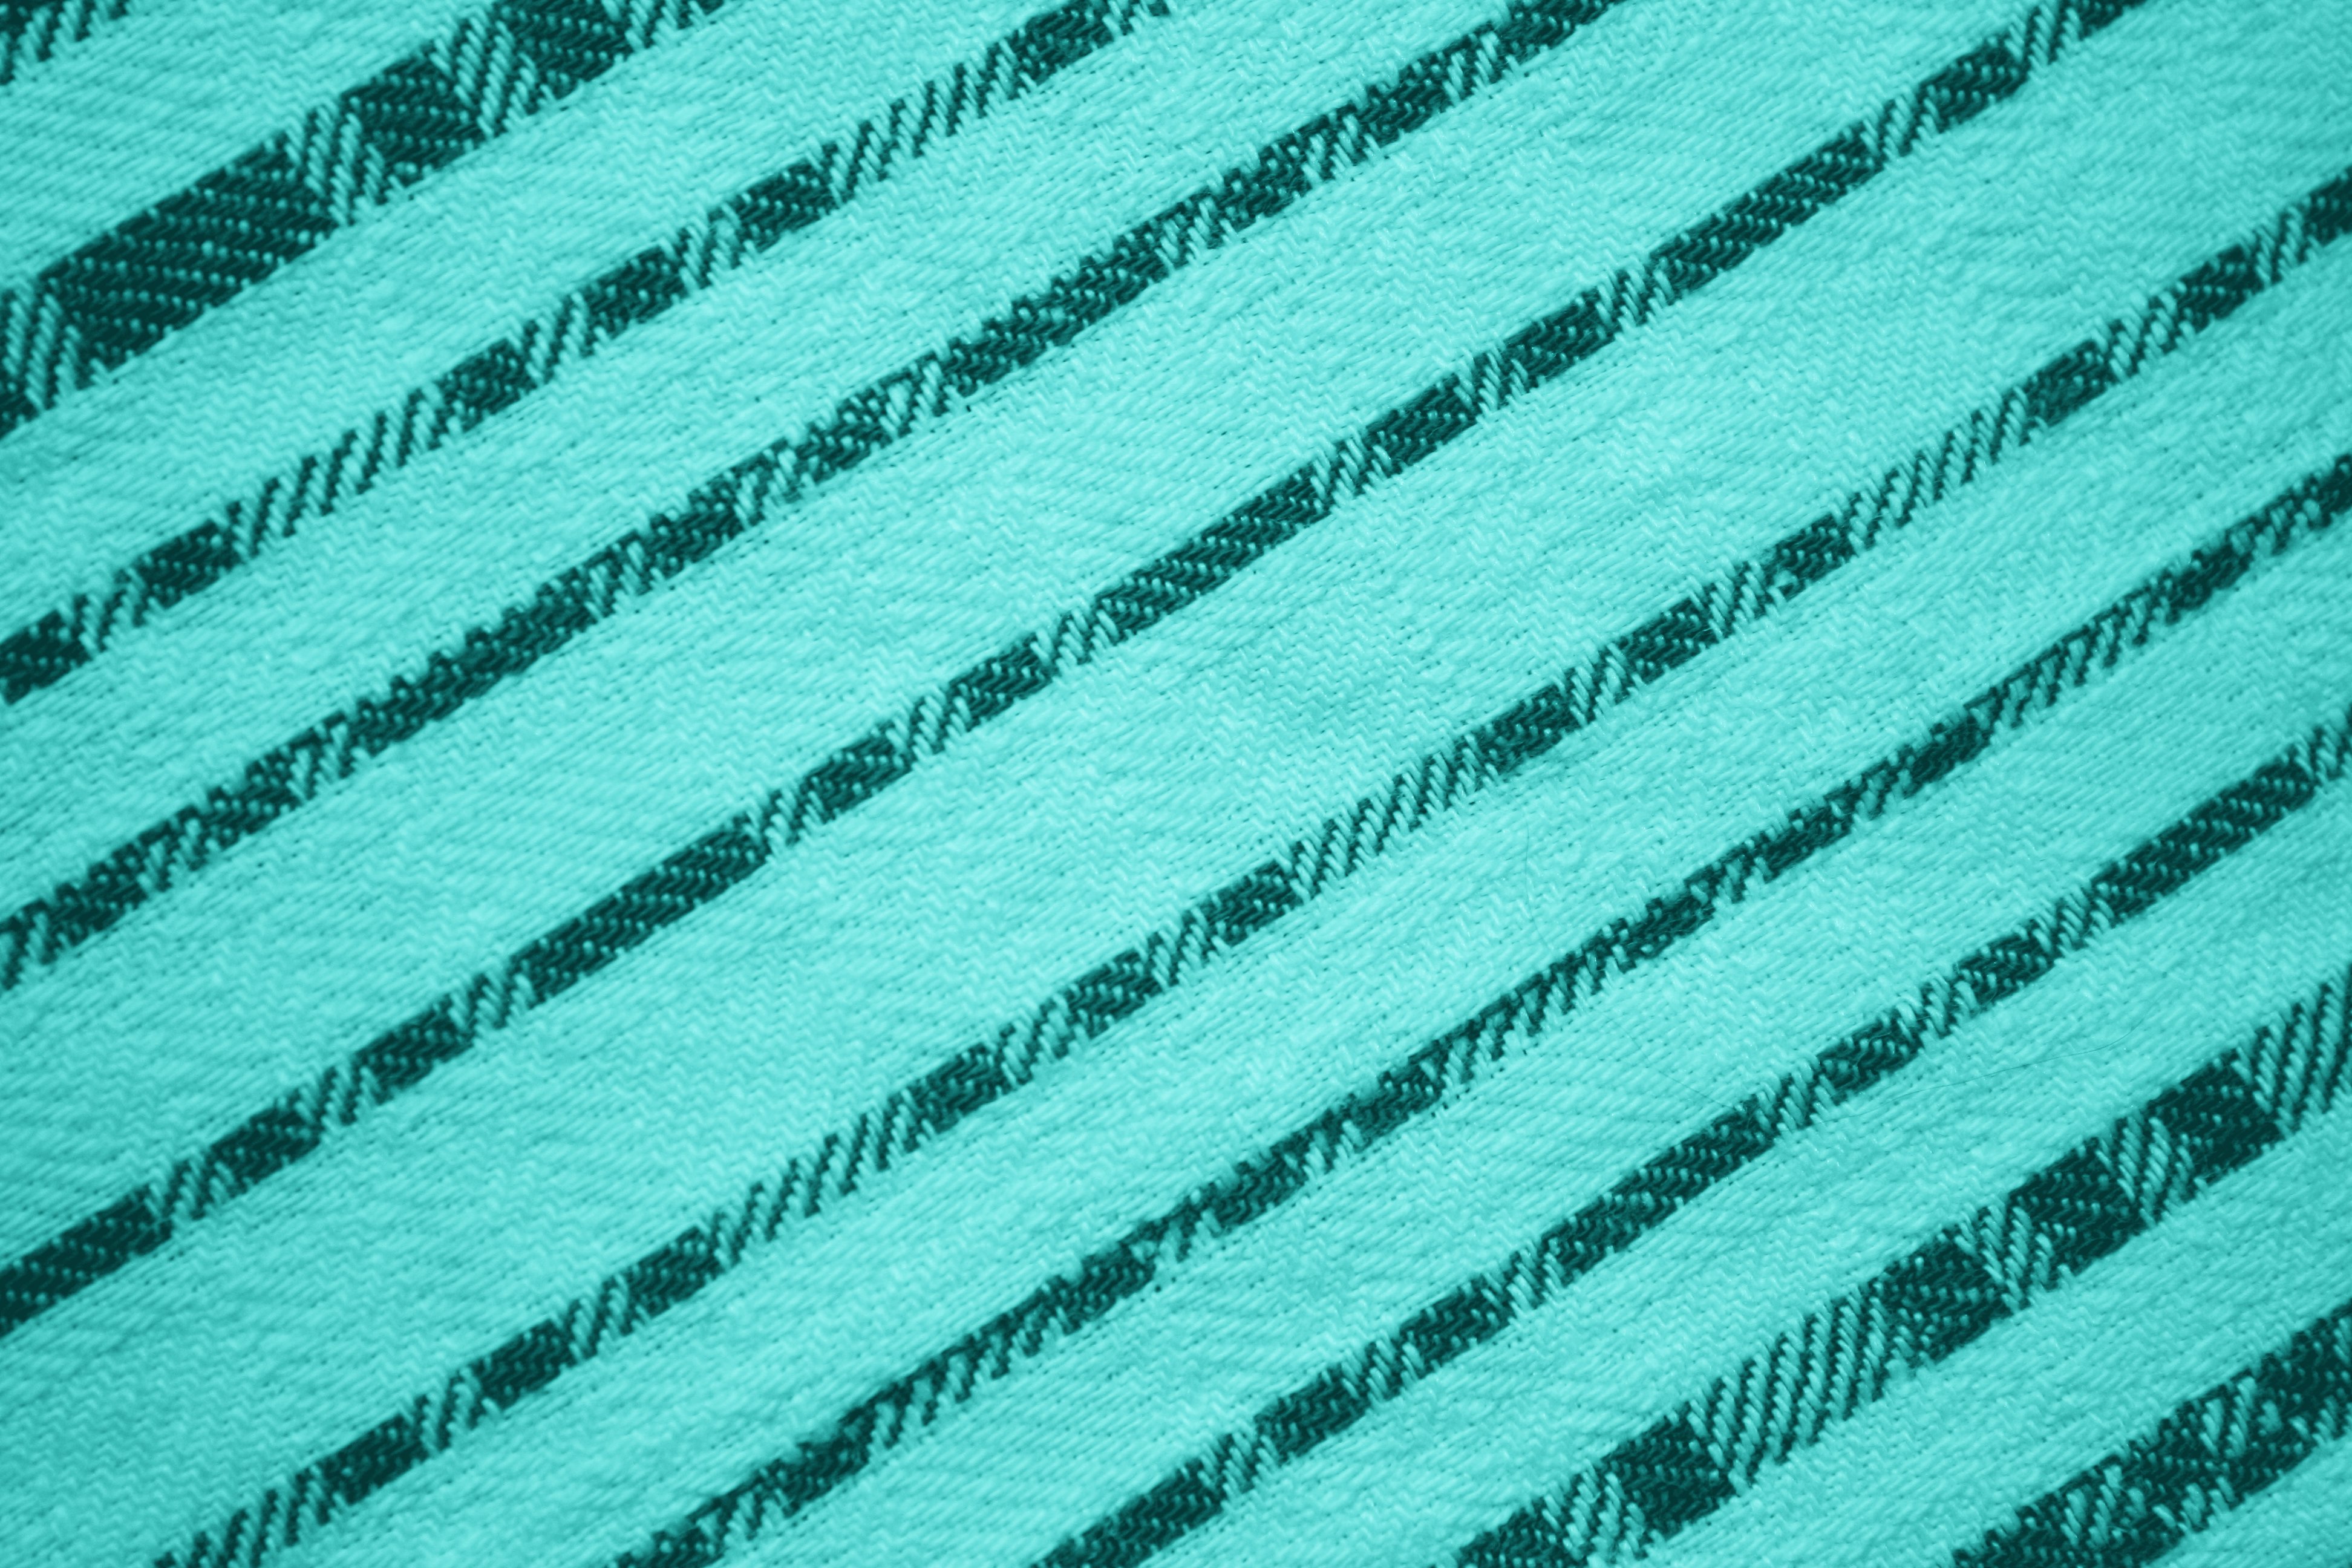 Teal Diagonal Stripes Fabric Texture Picture Free Photograph Photos